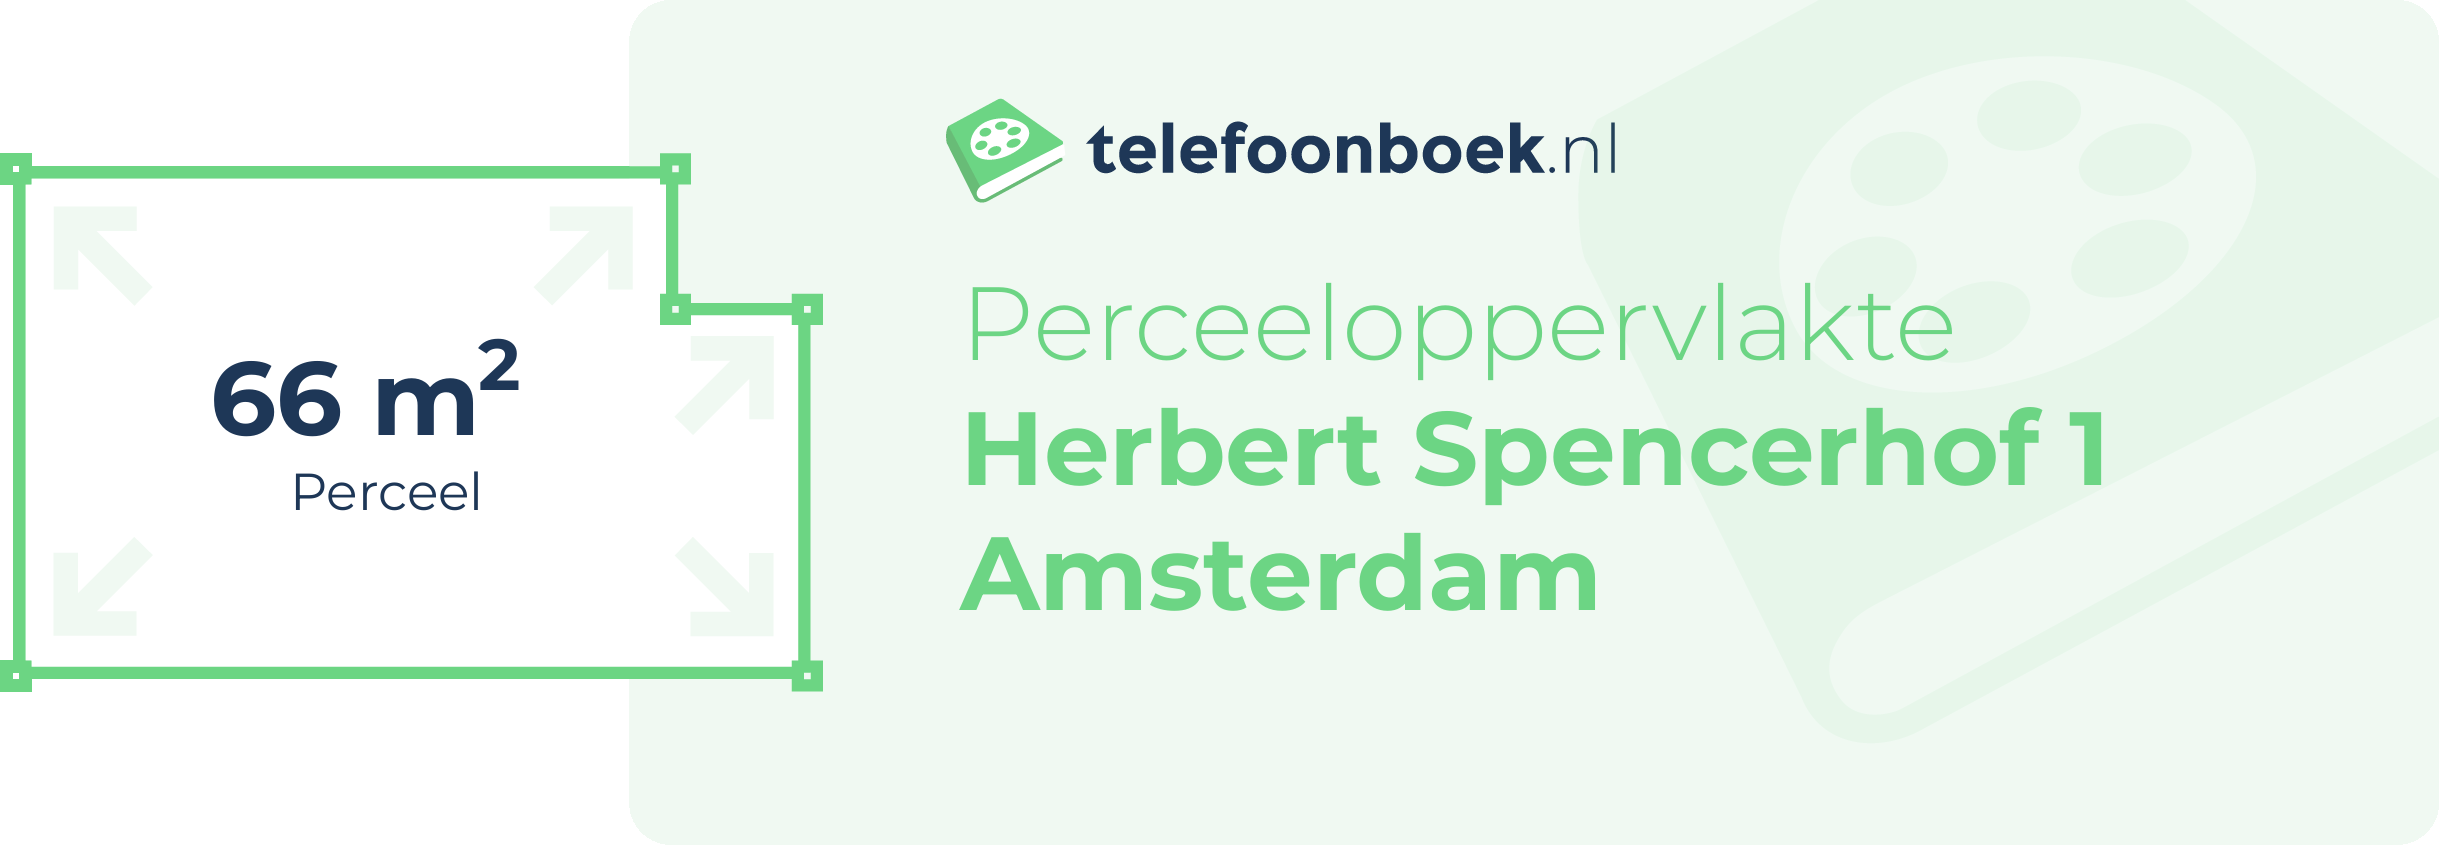 Perceeloppervlakte Herbert Spencerhof 1 Amsterdam